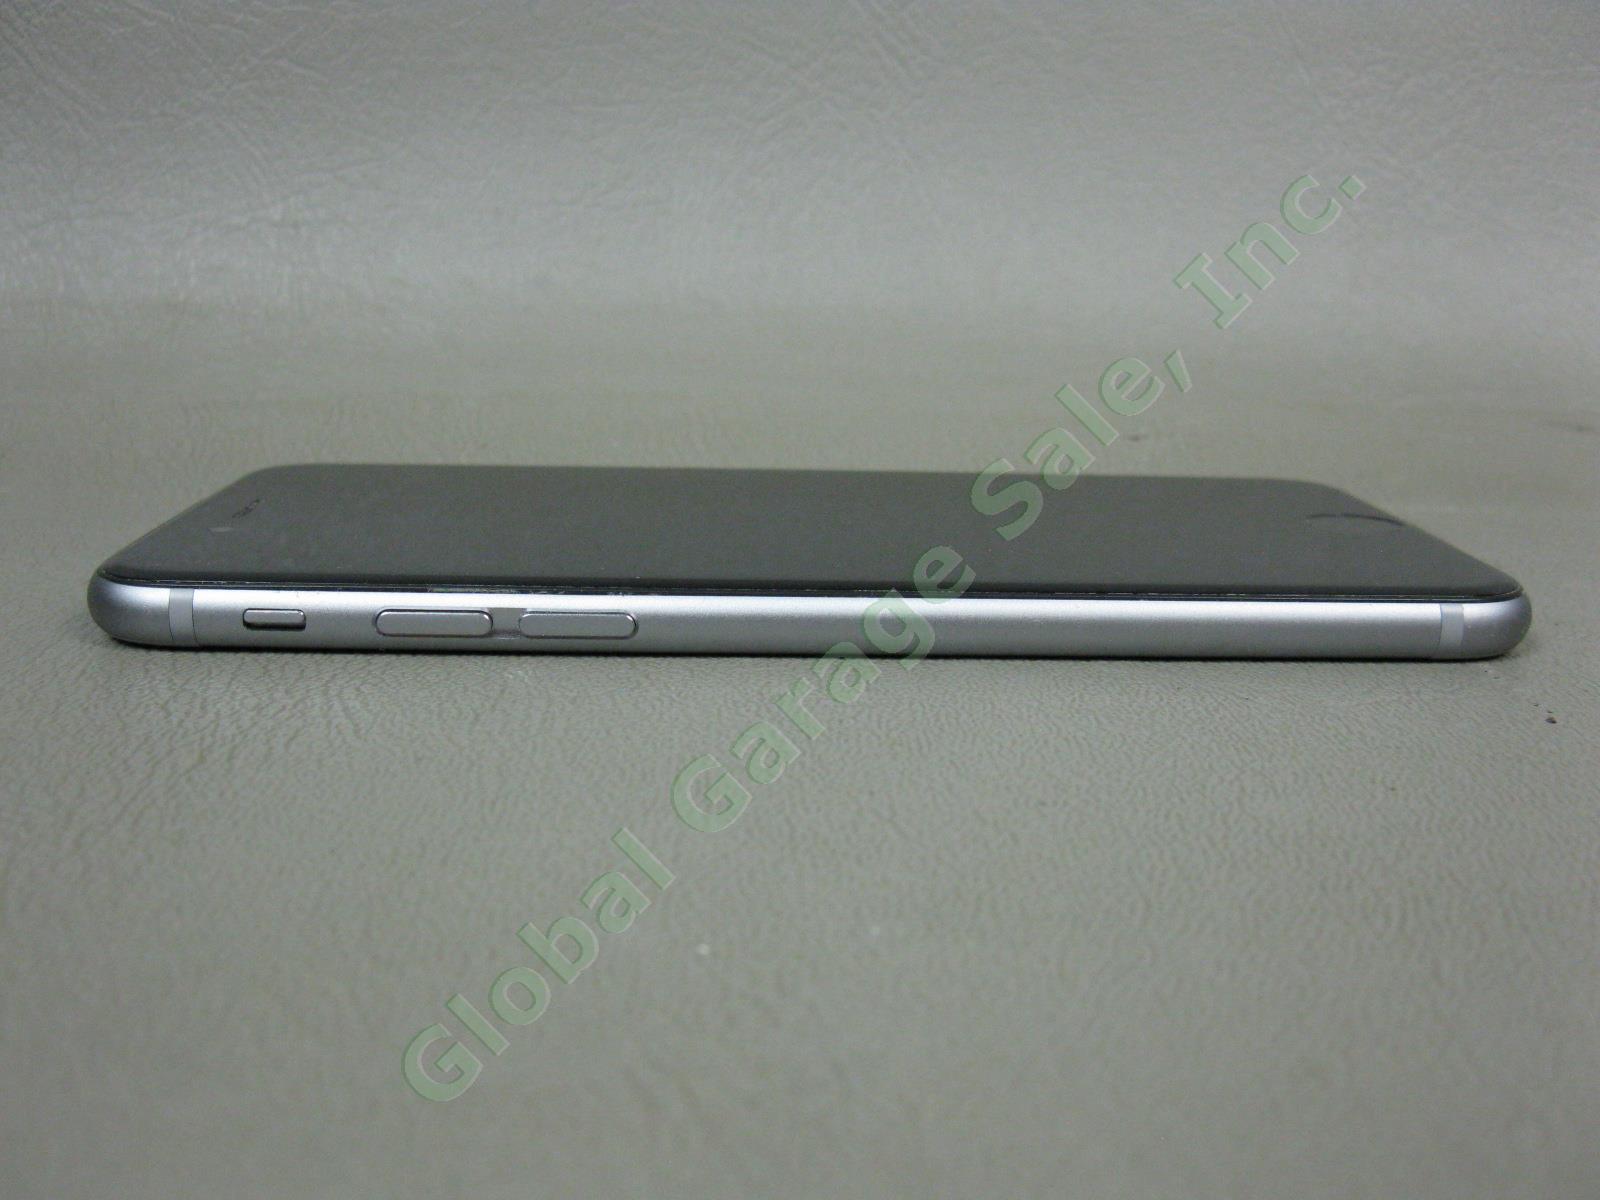 Apple iPhone 6 A1549 MG5X2LL/A Verizon 128GB? No Power For Repair Perfect Screen 3